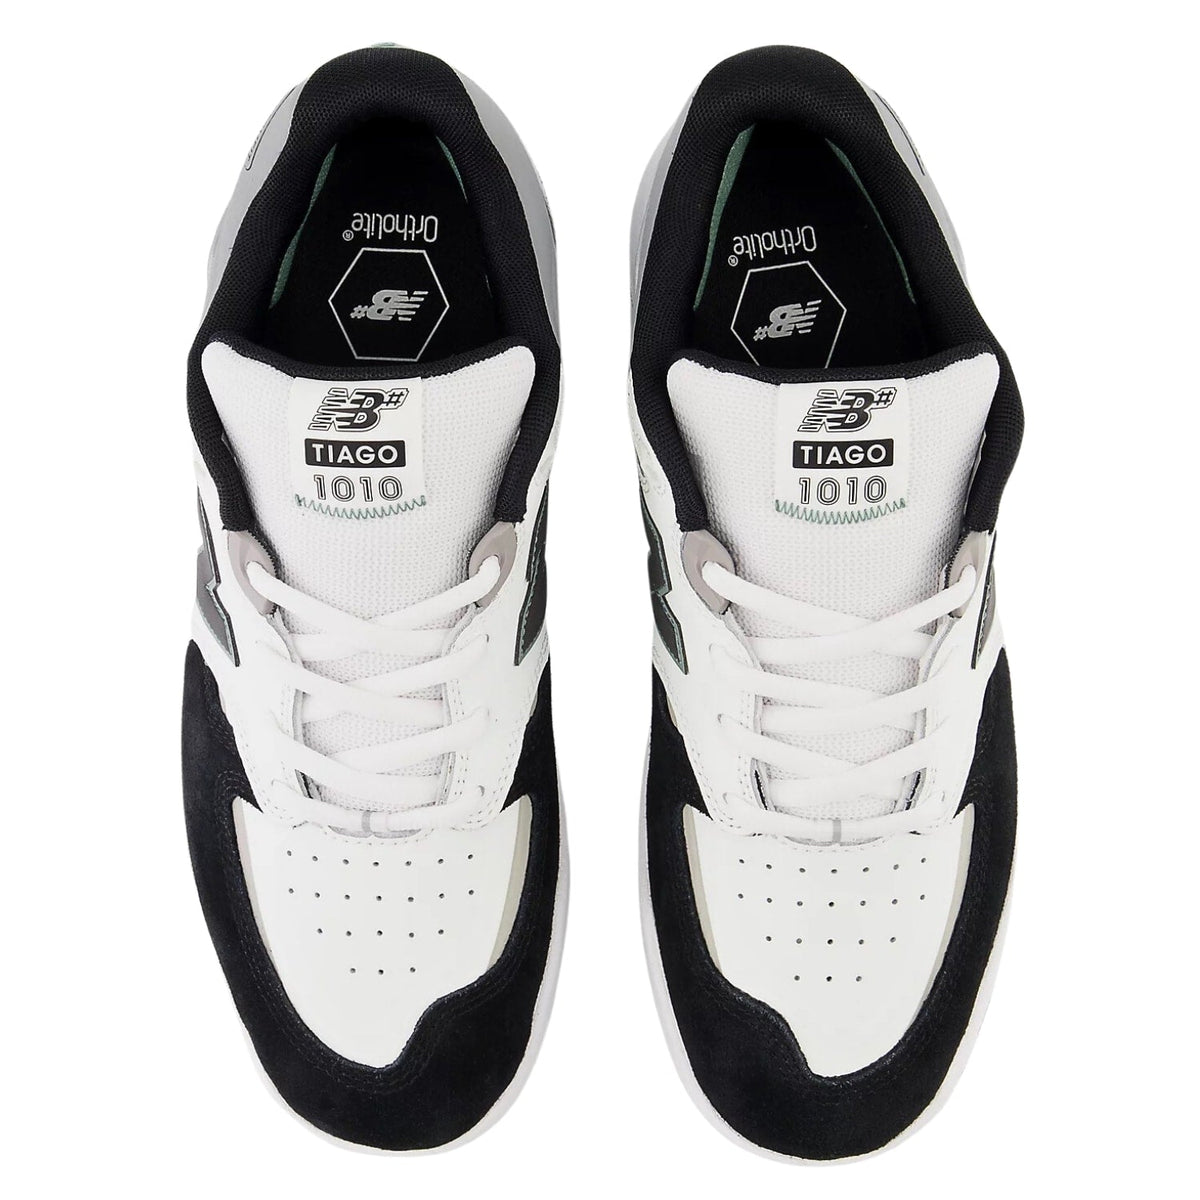 New Balance Numeric NM1010 Tiago Skate Shoes - White/Black